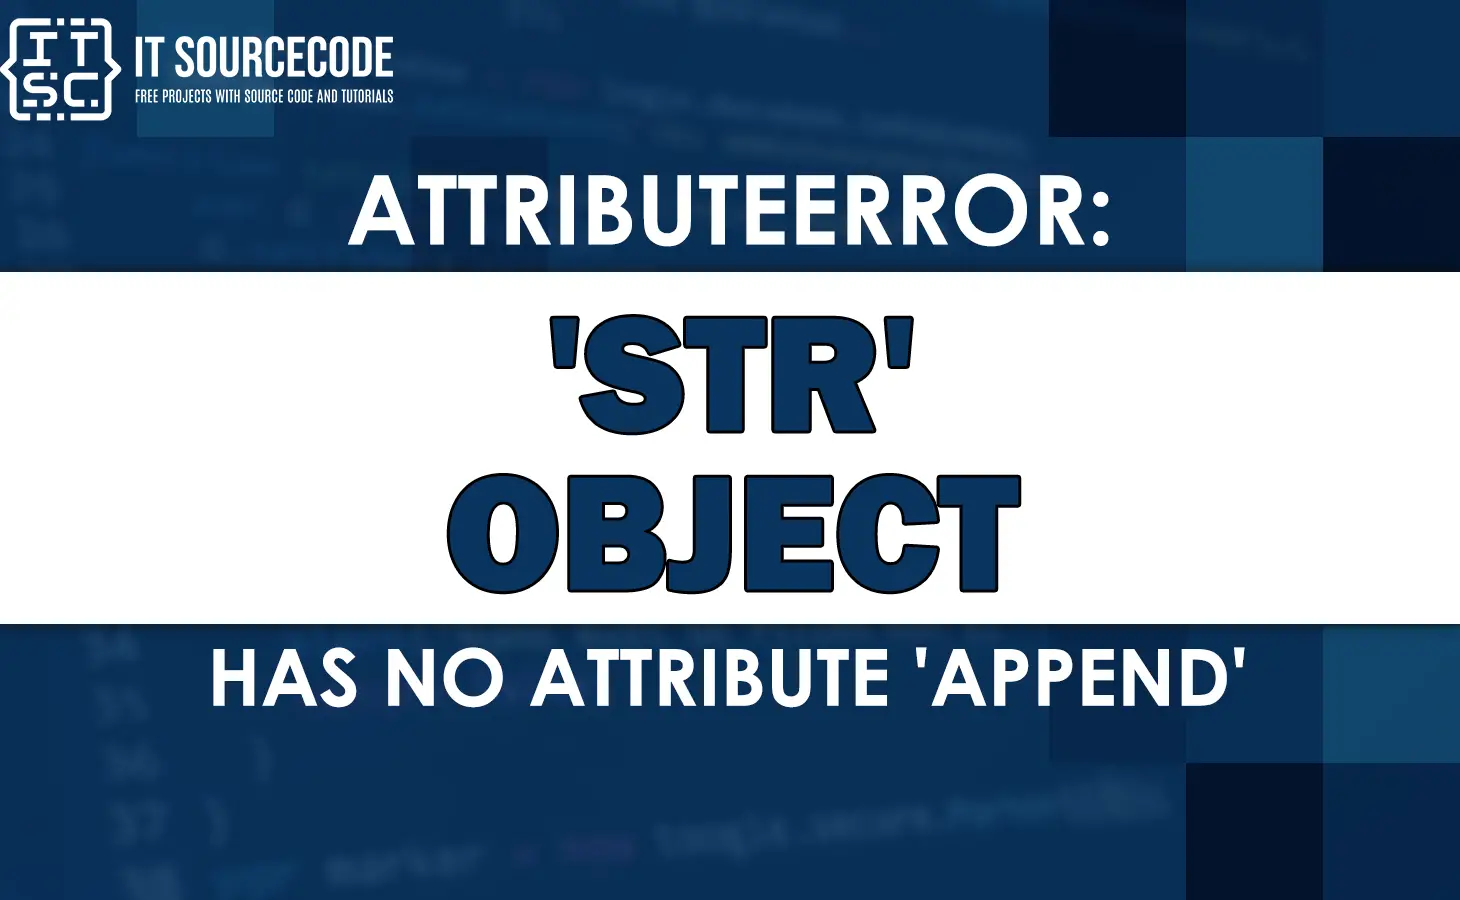 Attributeerror: 'str' object has no attribute 'append'